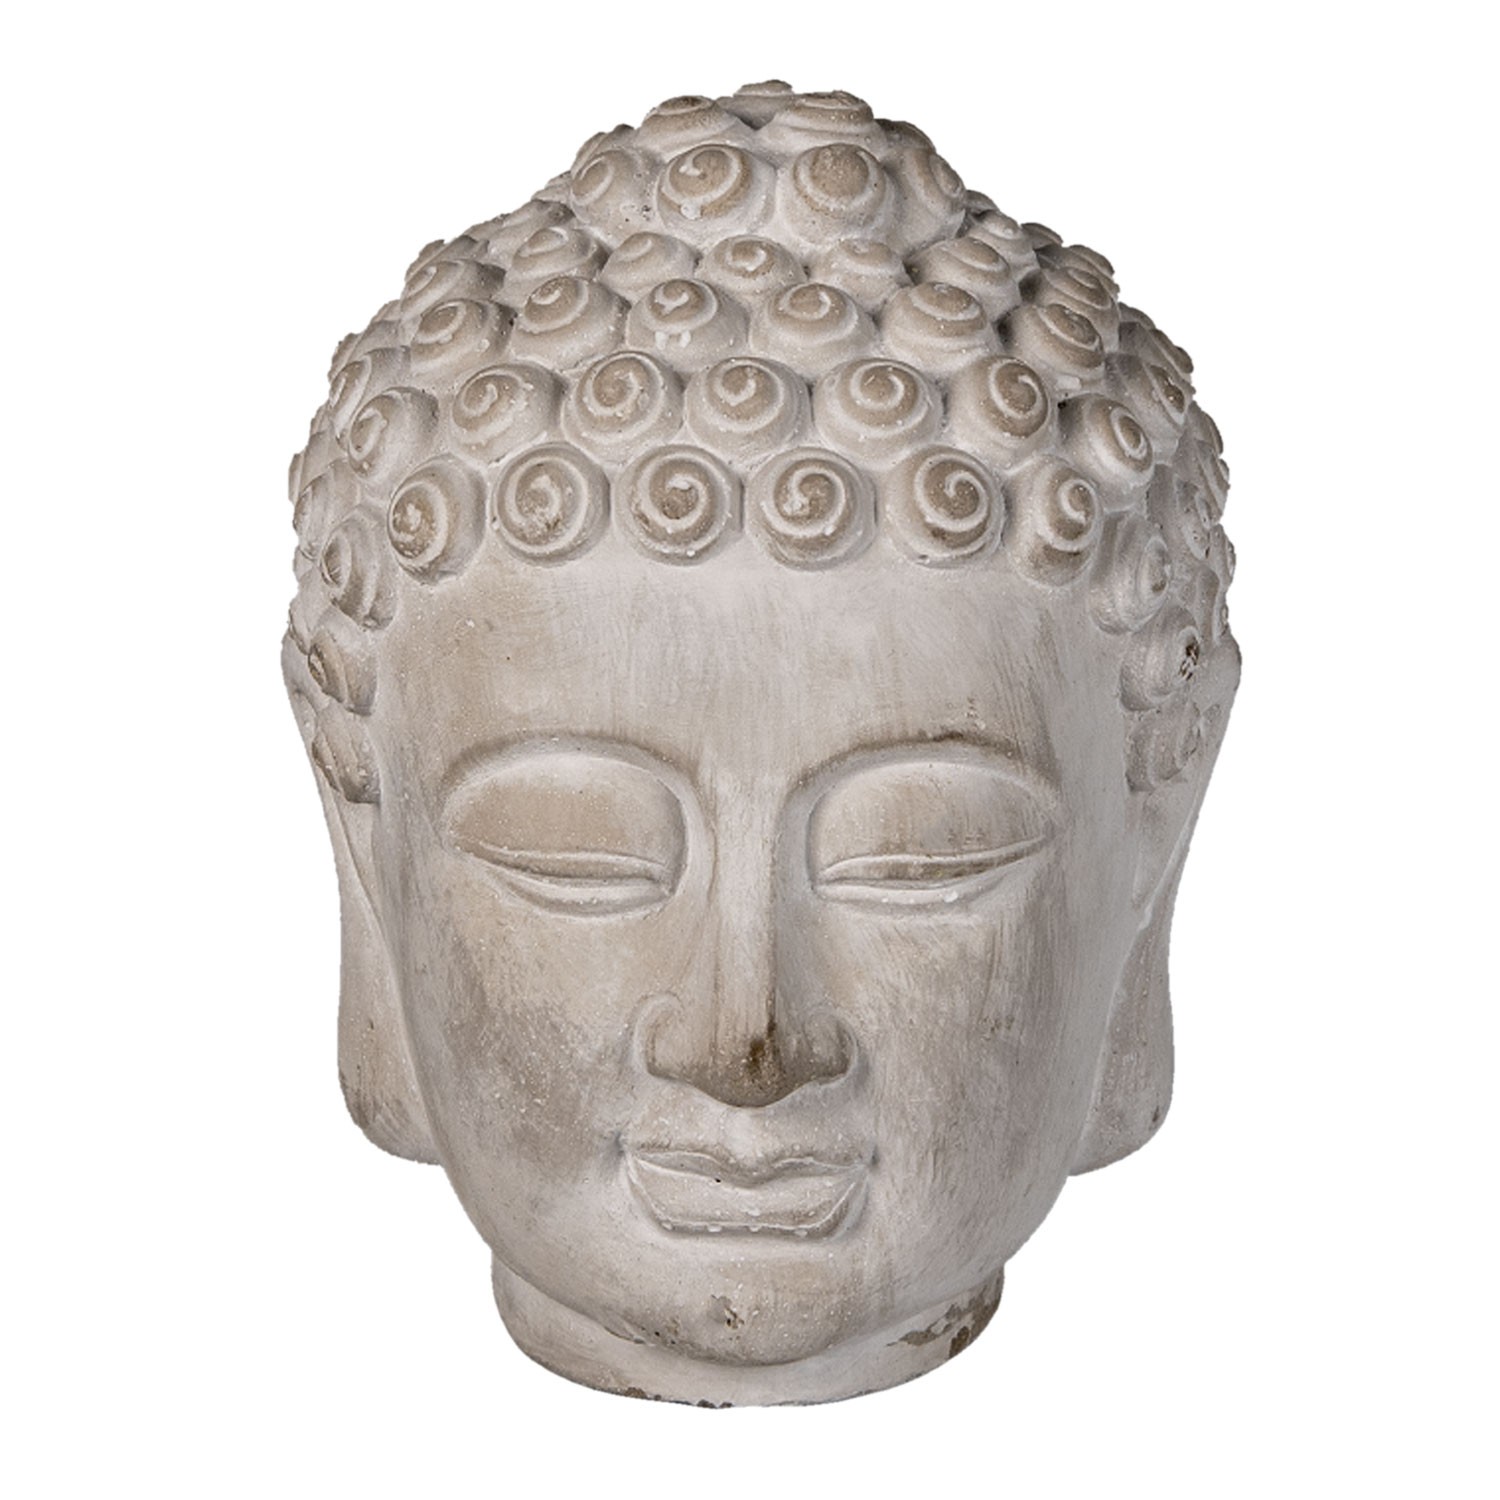 Dekorace šedá hlava Buddhy S - 13*14*17 cm 6TE0360S